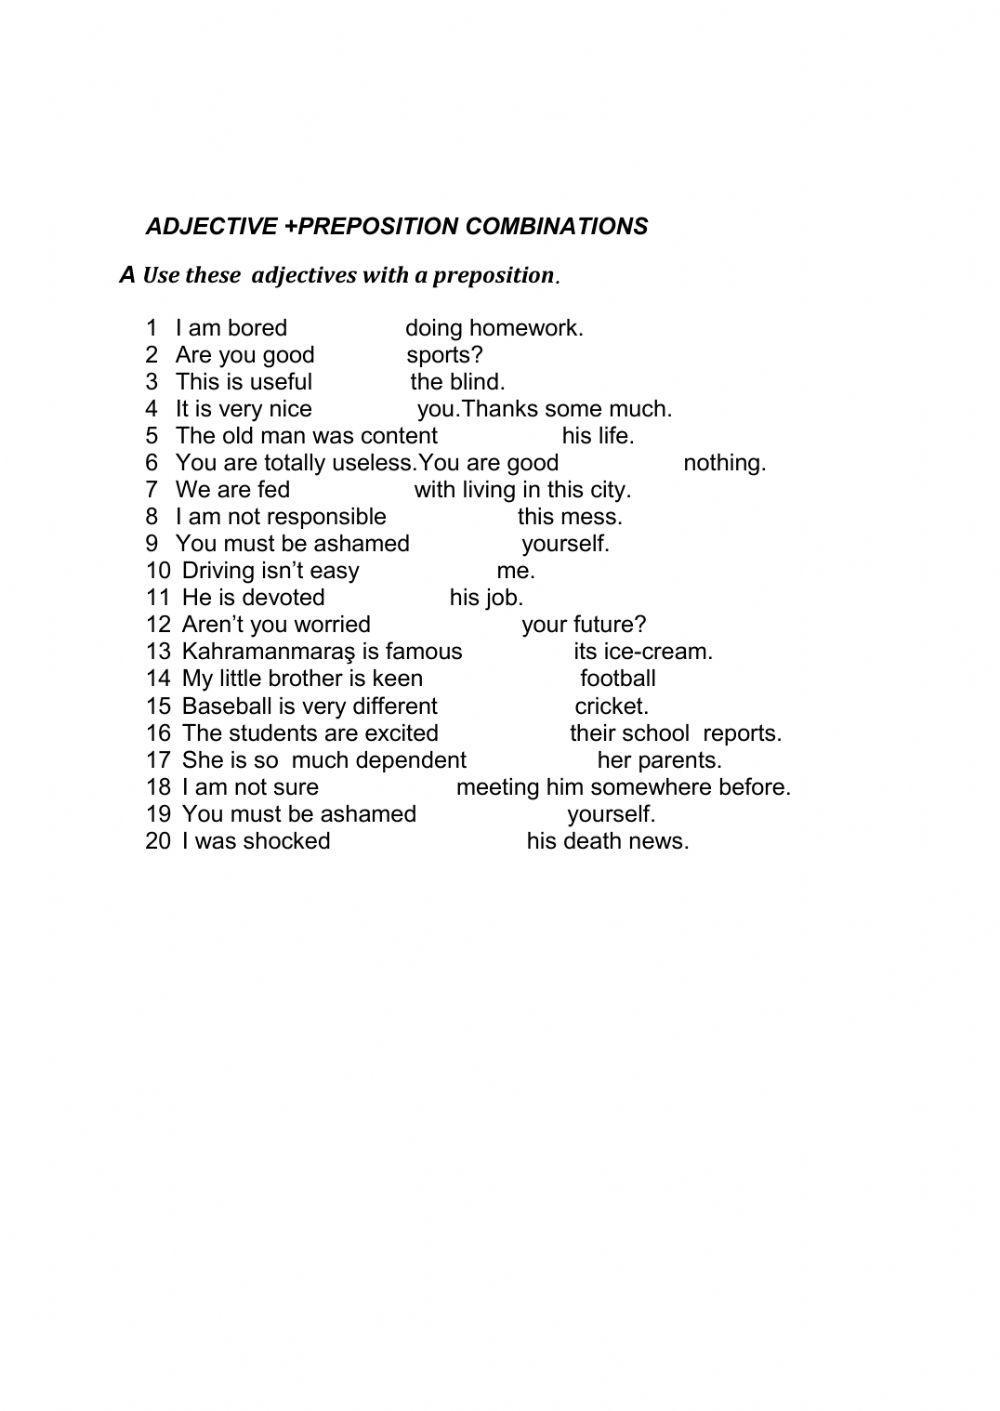 Adjective Preposition combinations